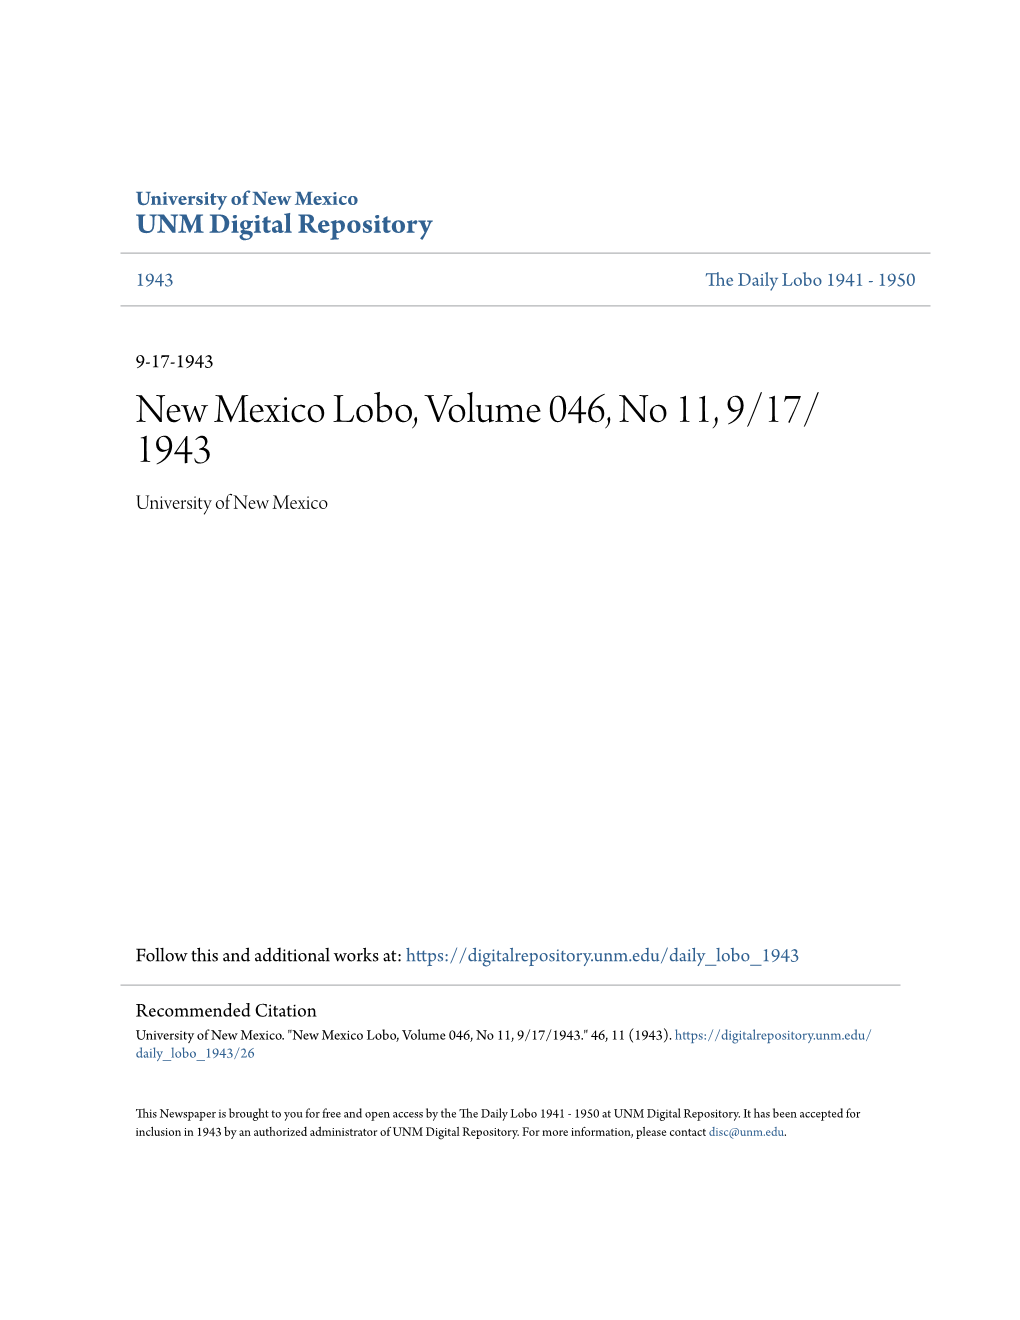 New Mexico Lobo, Volume 046, No 11, 9/17/1943." 46, 11 (1943)